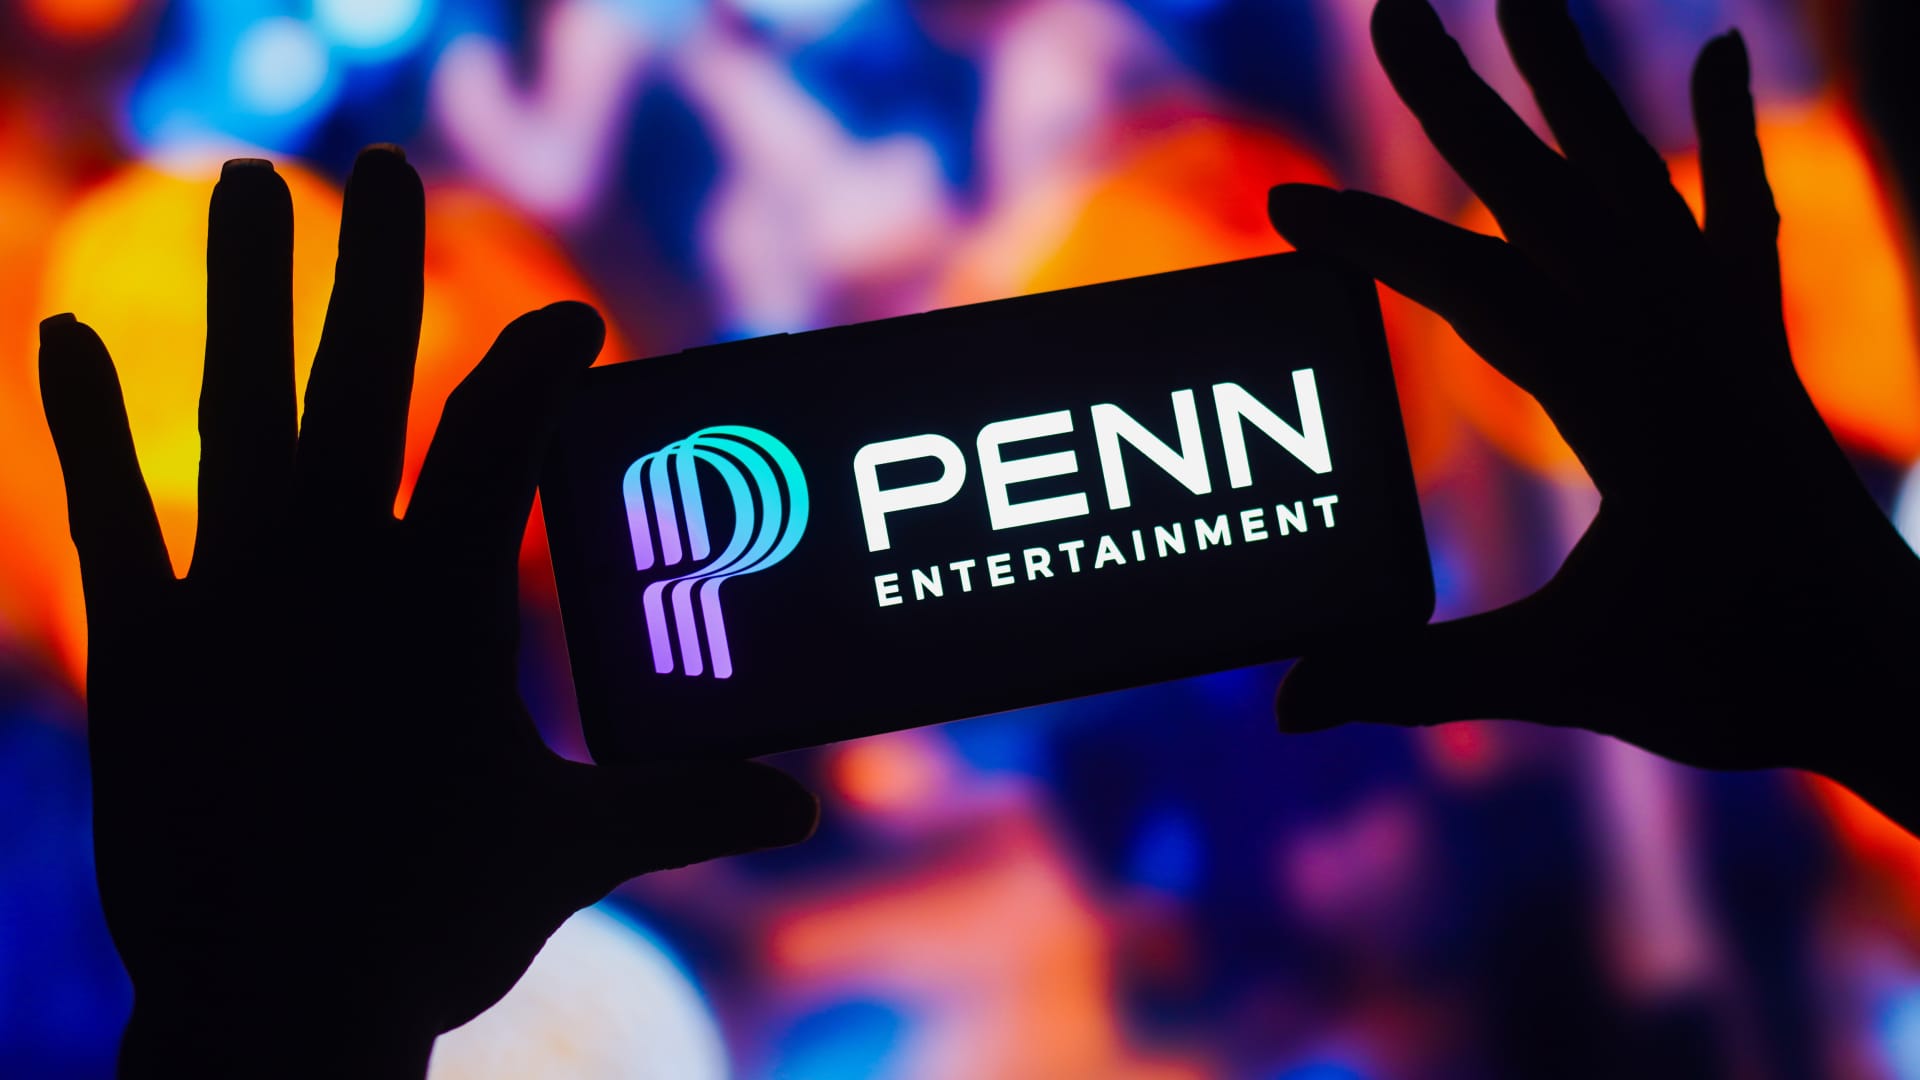 Penn’s sports betting business posts head-turning fourth quarter profit